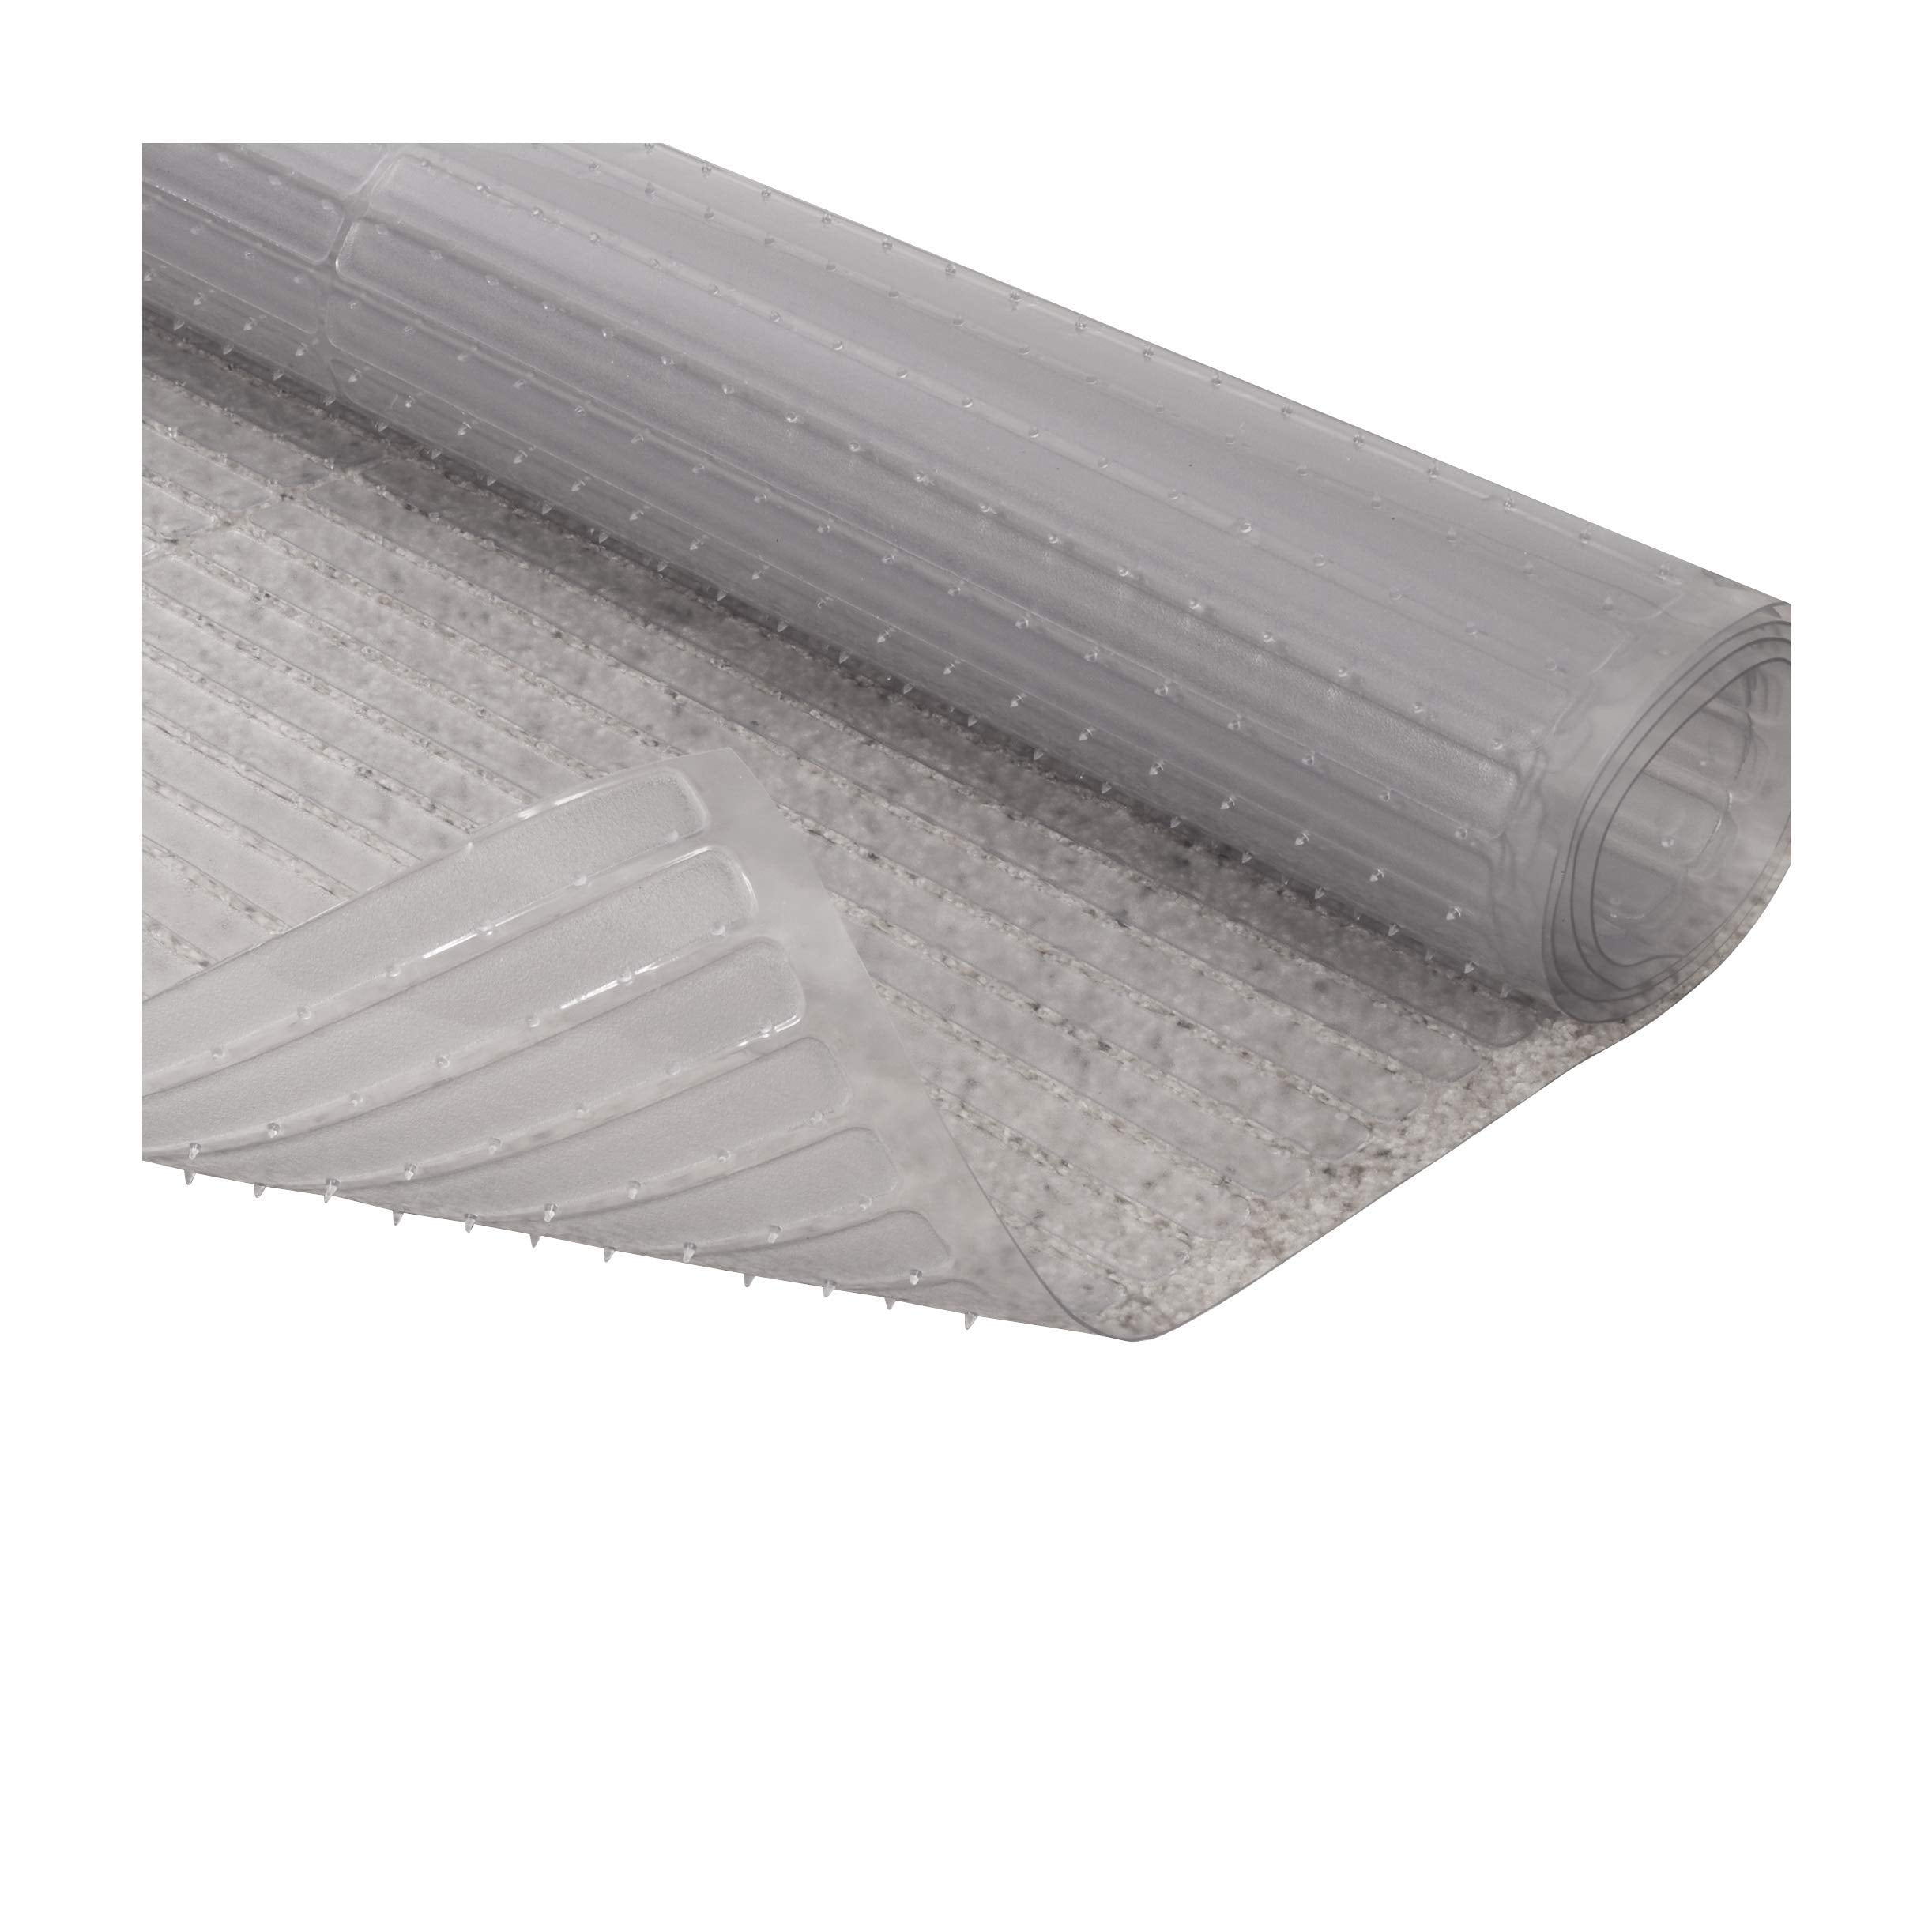 6' Clear Vinyl Plastic Floor Runner/Protector for Low Pile Carpet Resilia 